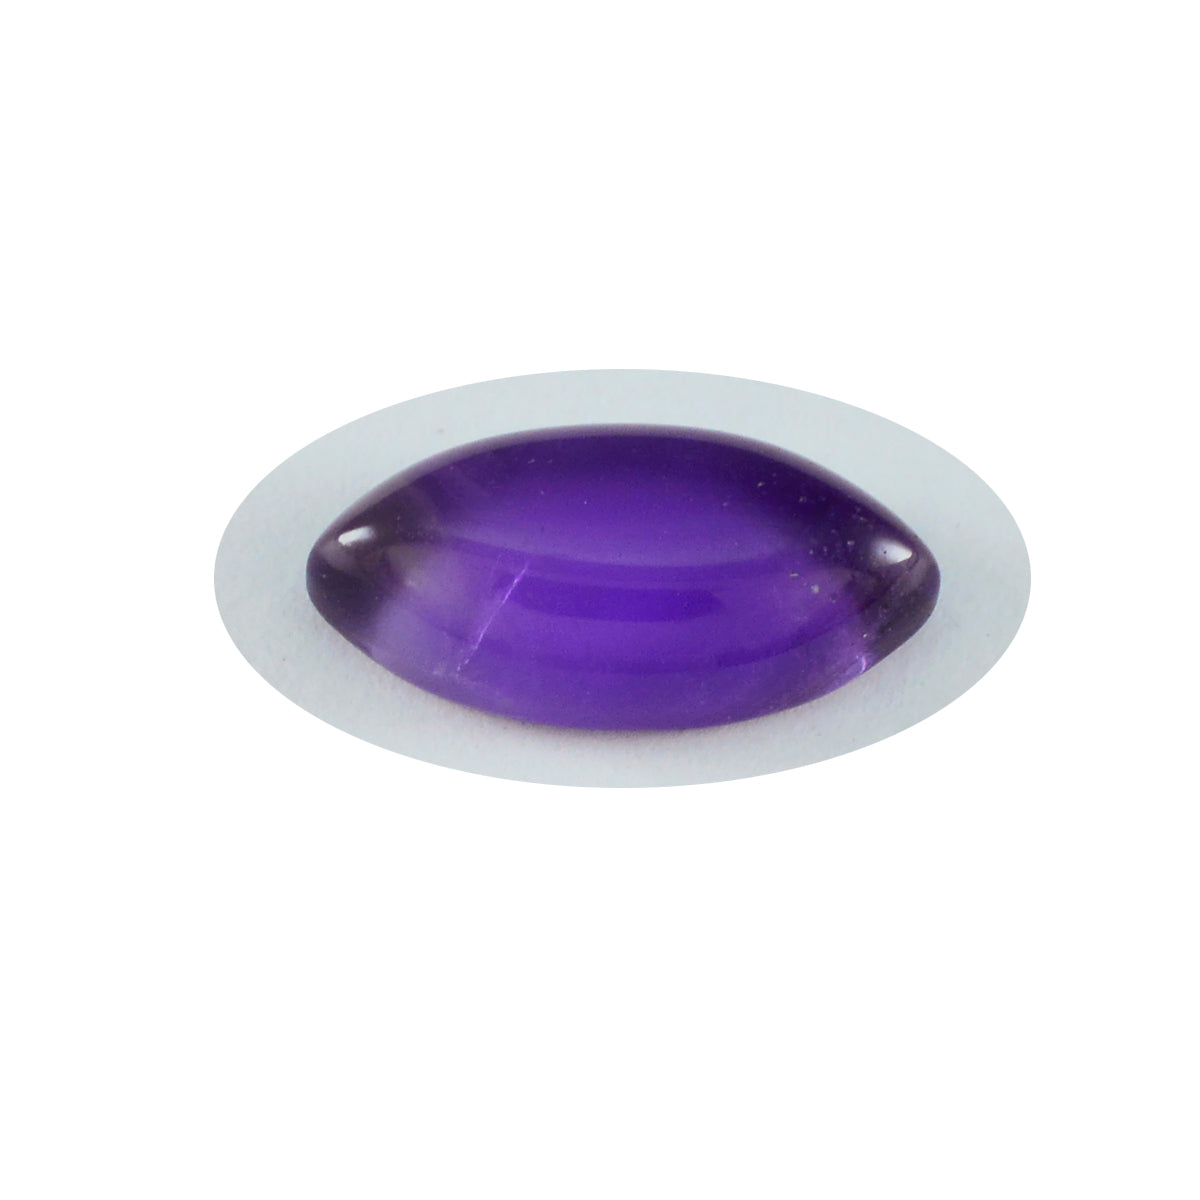 Riyogems 1 Stück violetter Amethyst-Cabochon, 11 x 12 mm, Marquise-Form, A+1-Qualitäts-Edelstein